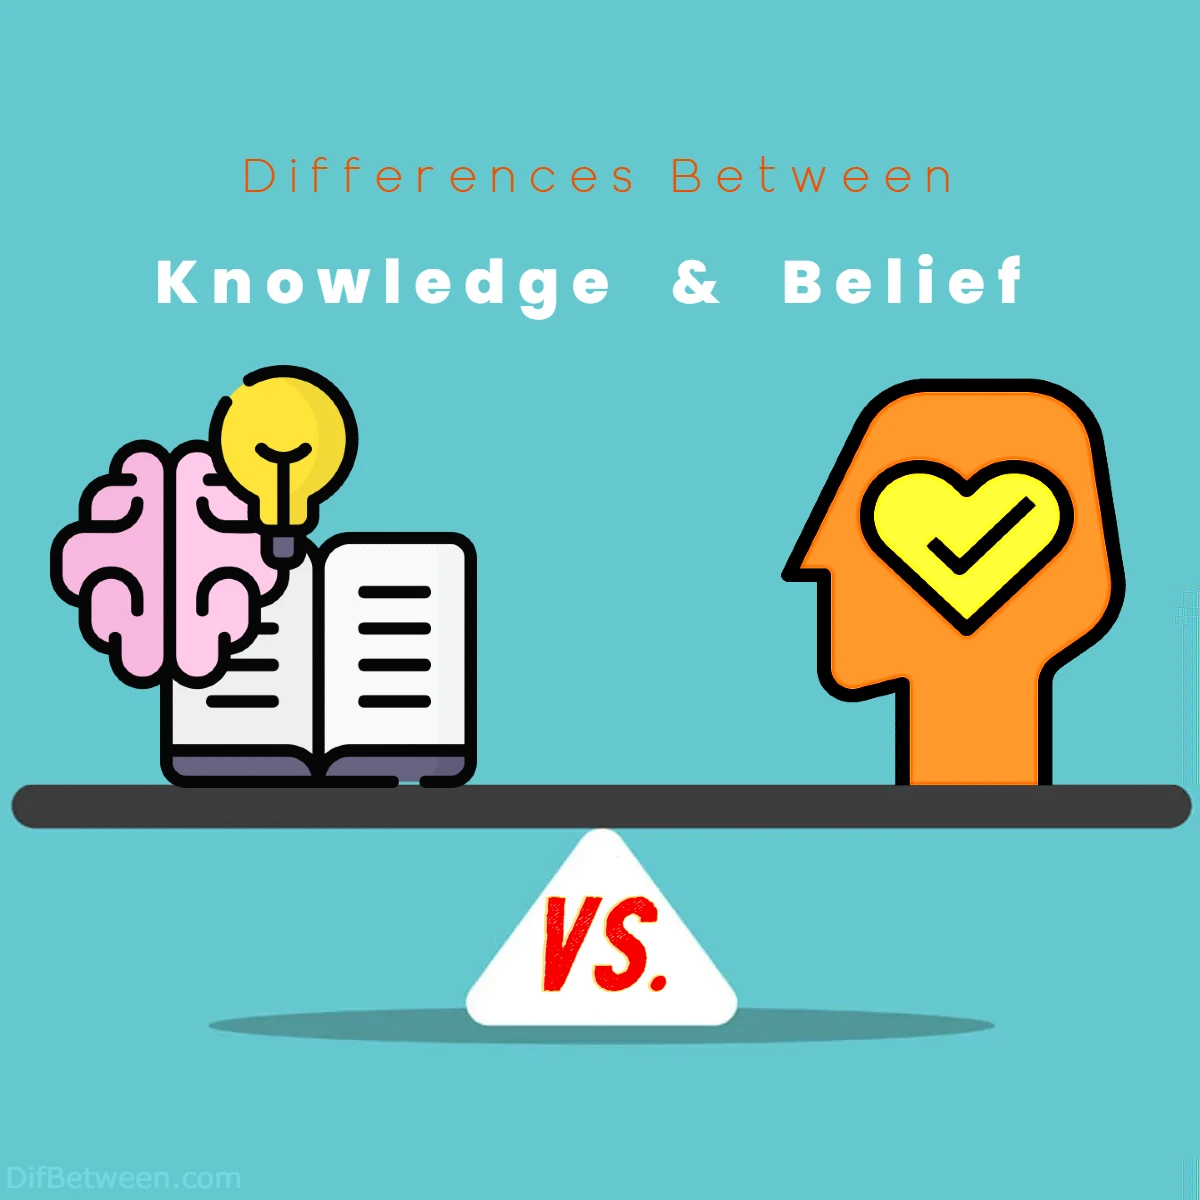 Differences Between Knowledge vs Belief